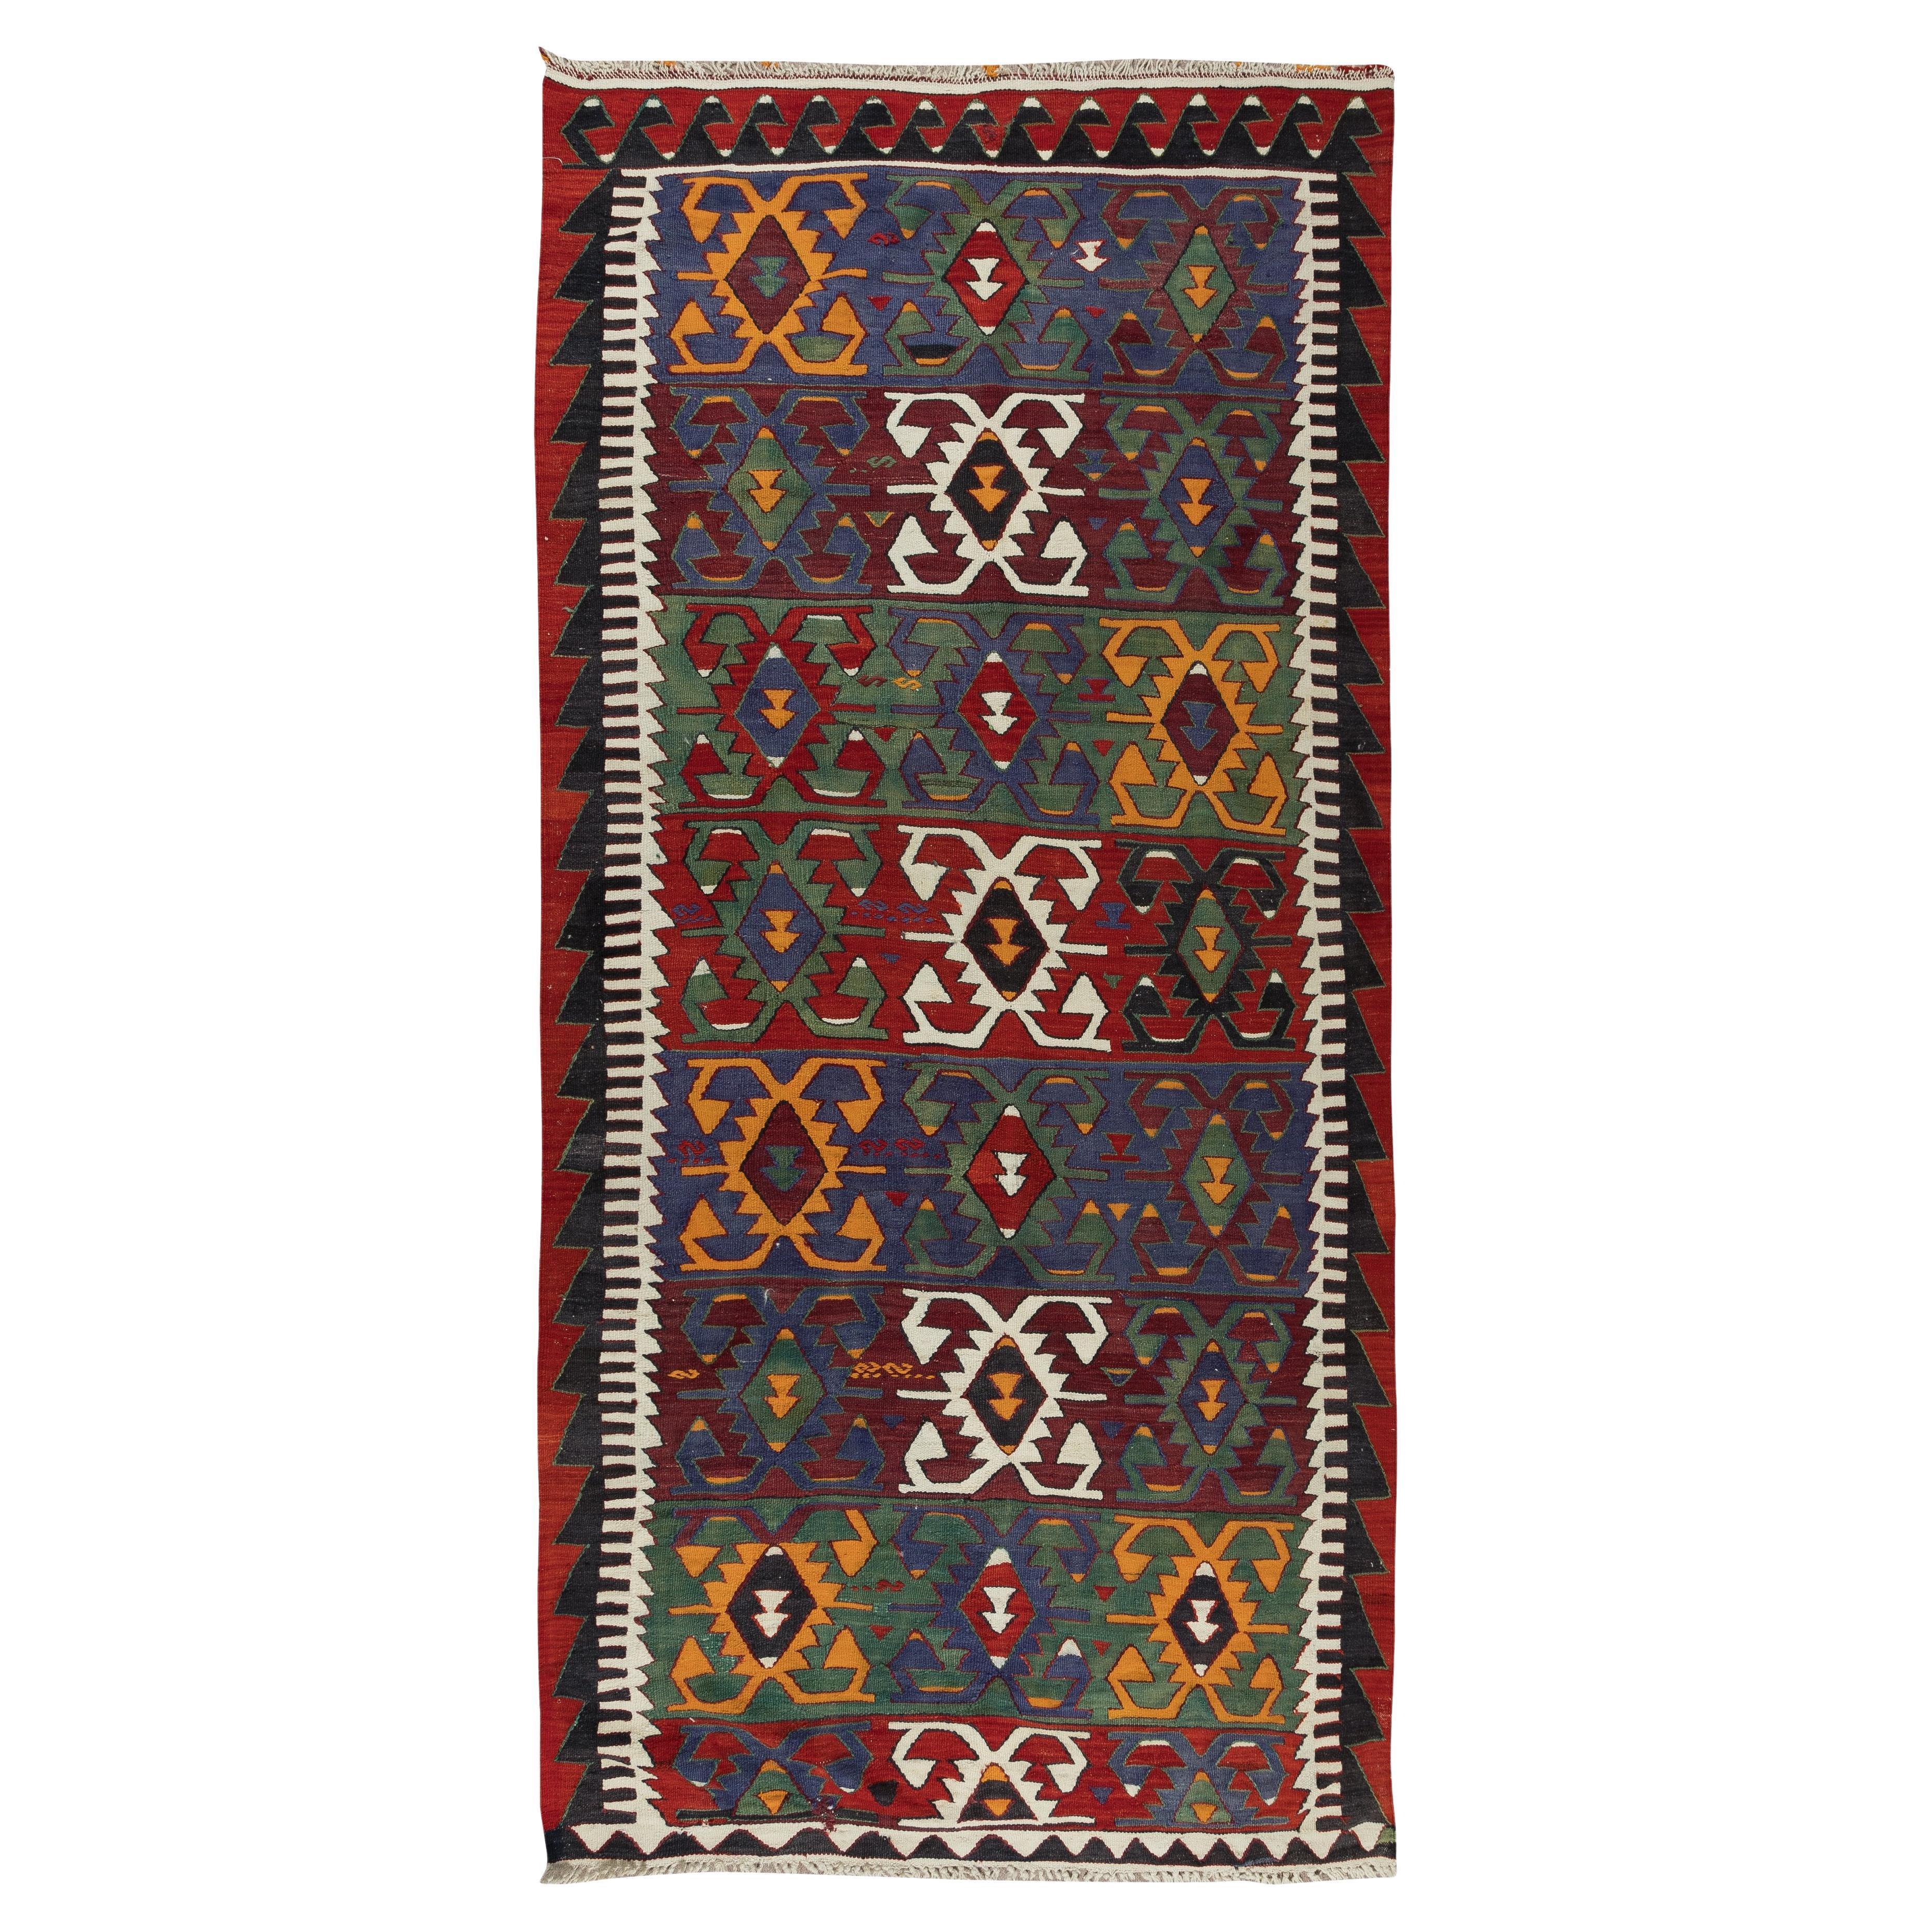 5.4x10.8 Ft Multicolor Hand-Woven Turkish Vintage Wool Kilim, Flat-Weave Rug For Sale